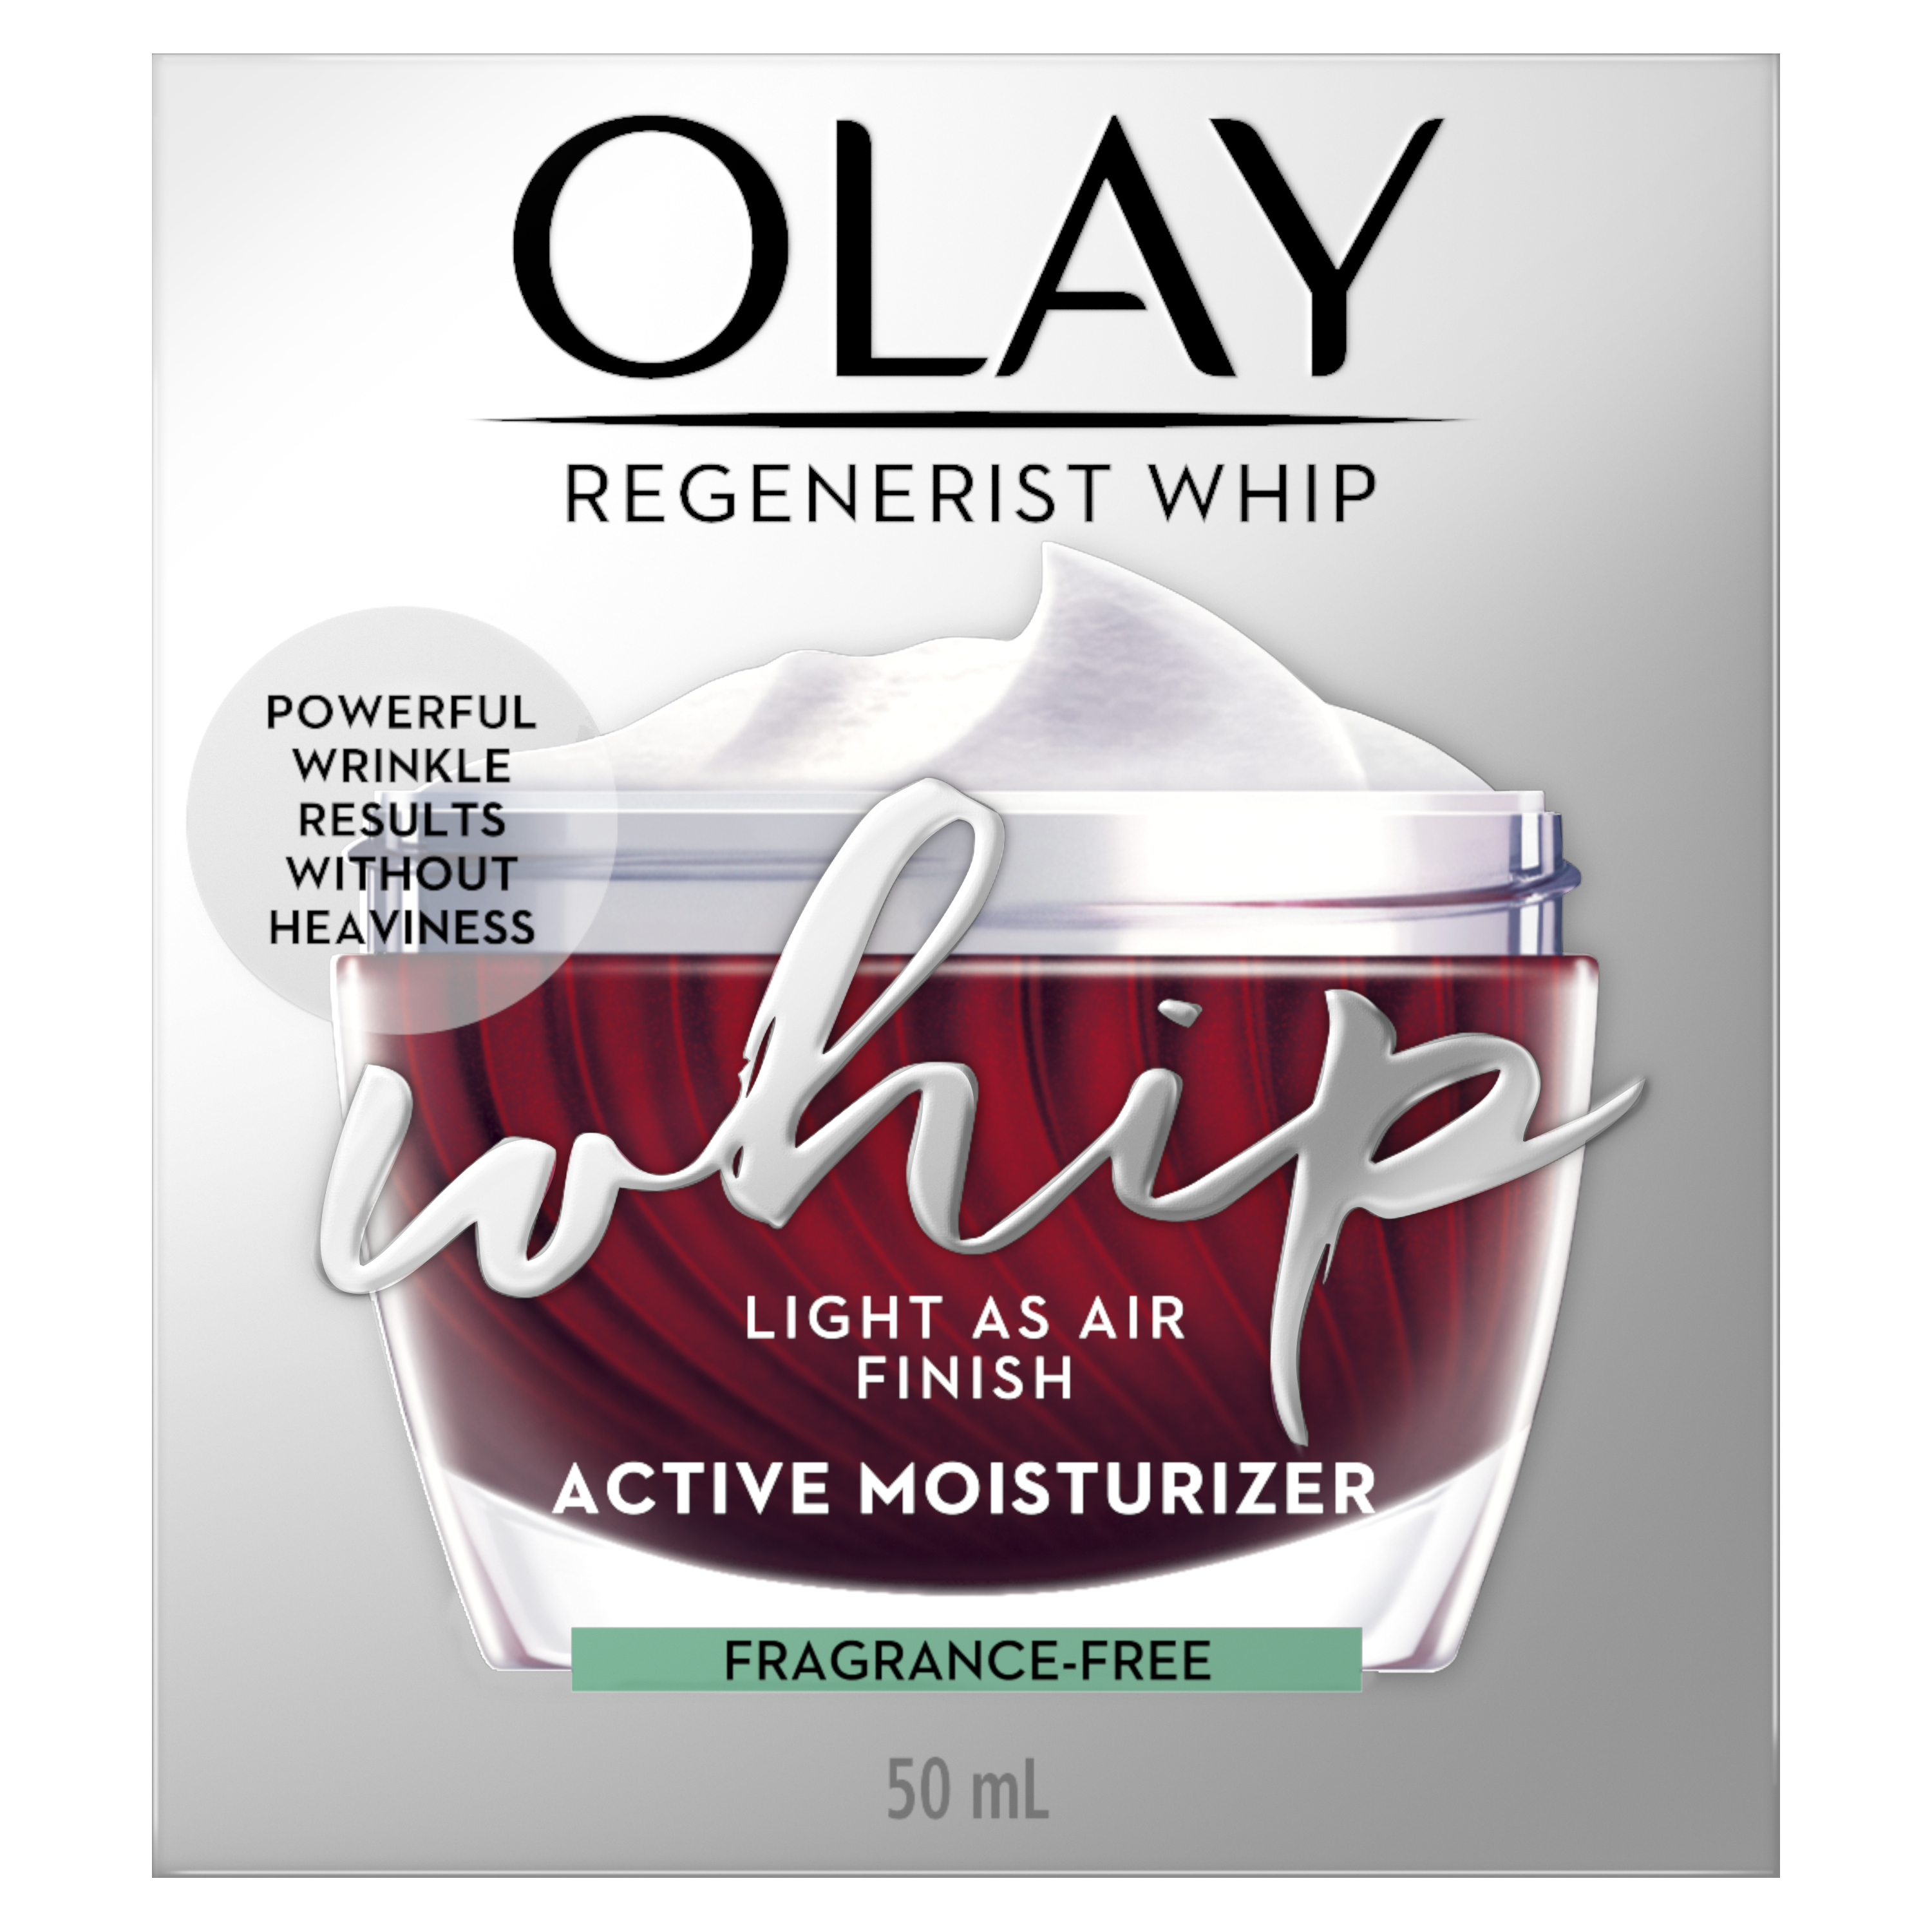 Olay Regenerist Whip Face Moisturizer Fragrance Free 50 ml